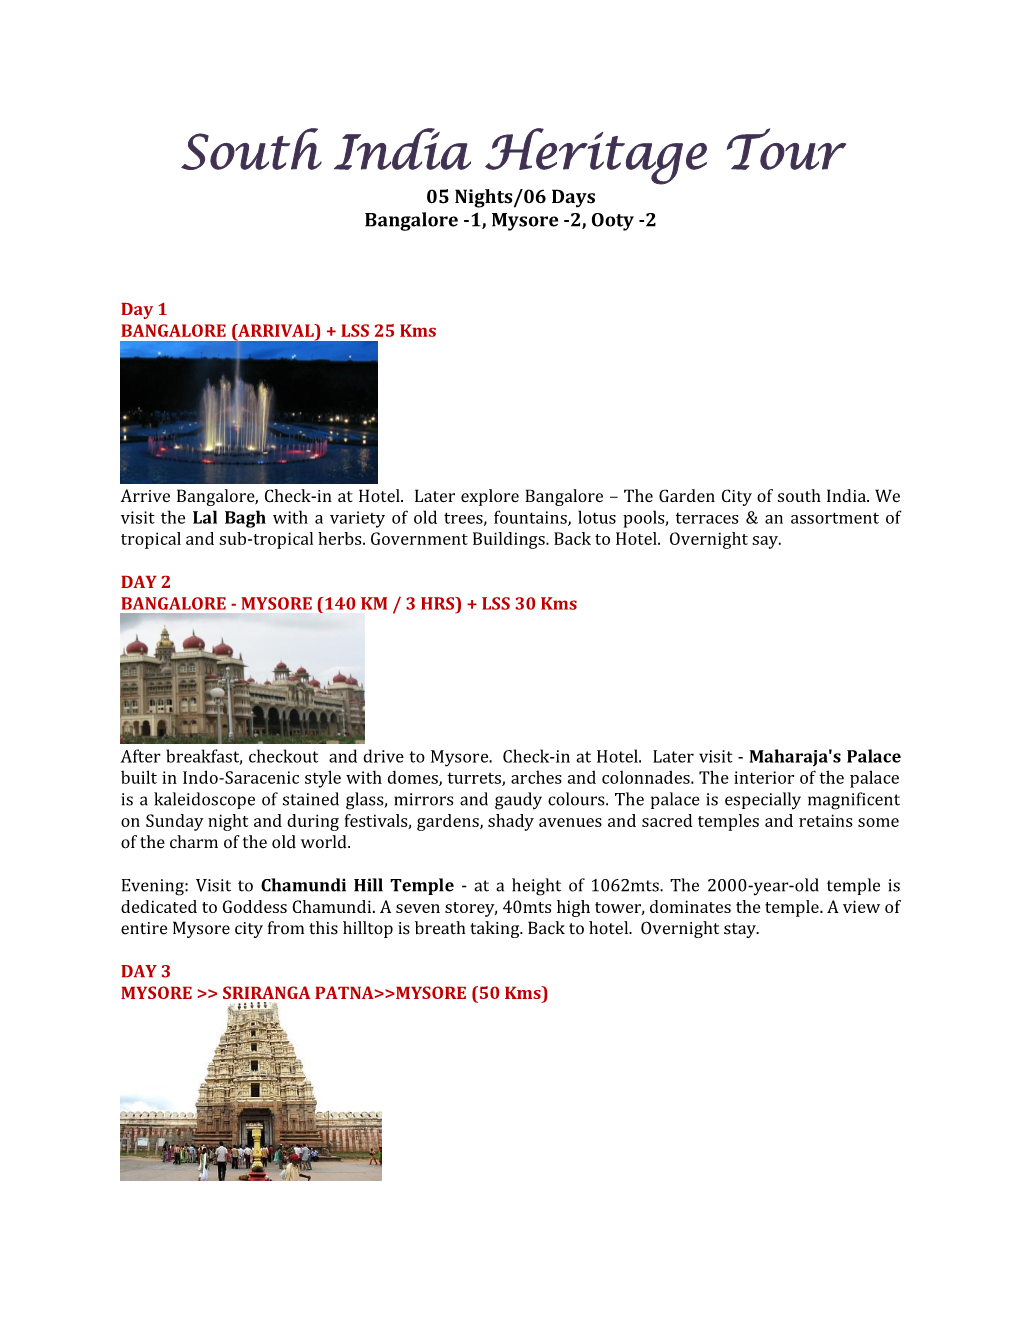 South India Heritage Tour 05 Nights/06 Days Bangalore -1, Mysore -2, Ooty -2